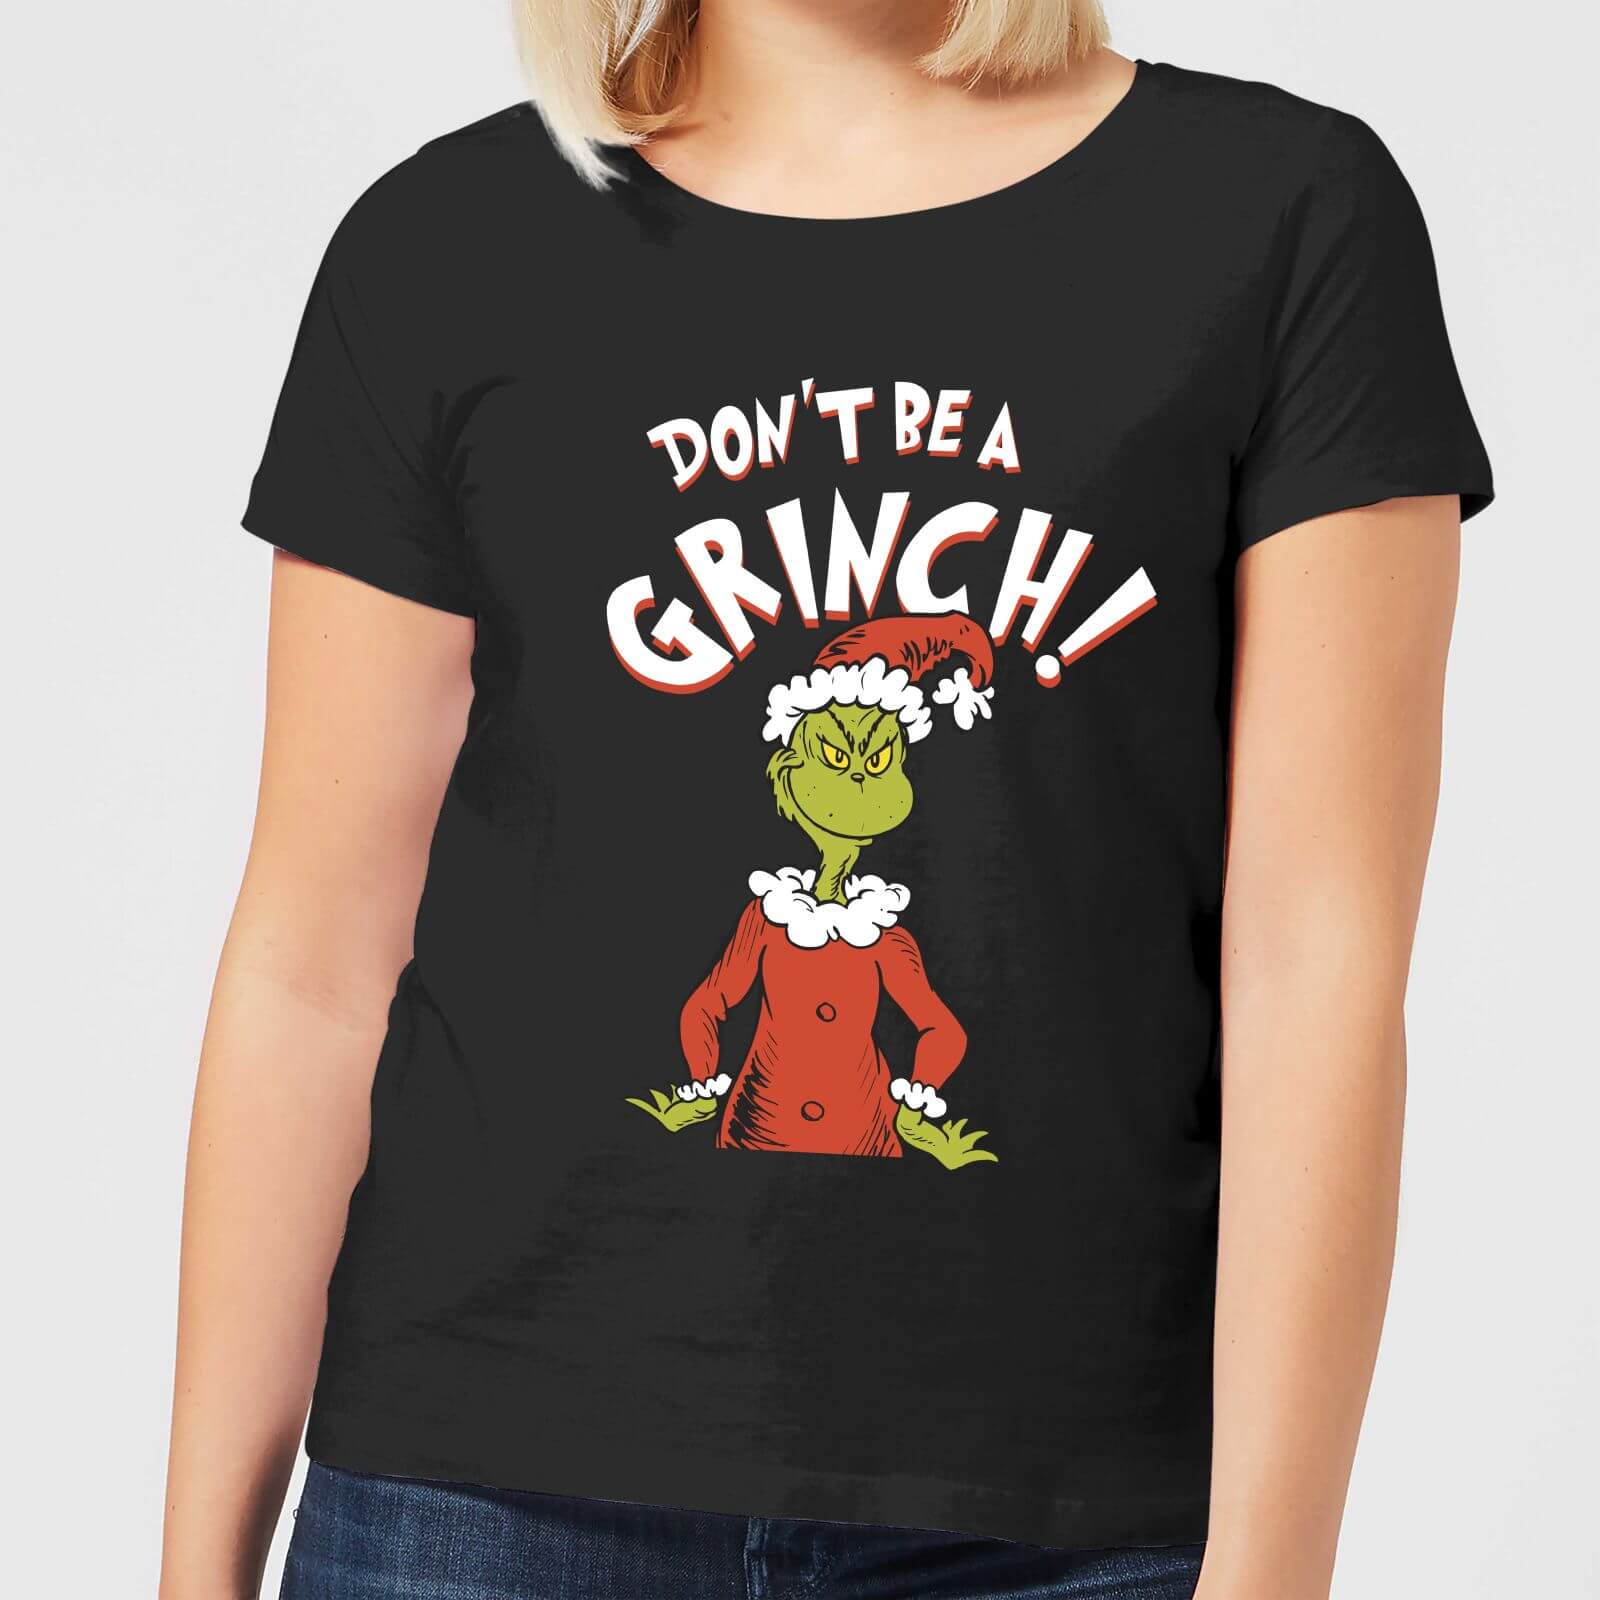 The Grinch Dont Be A Grinch Women's Christmas T-Shirt - Black - 4XL